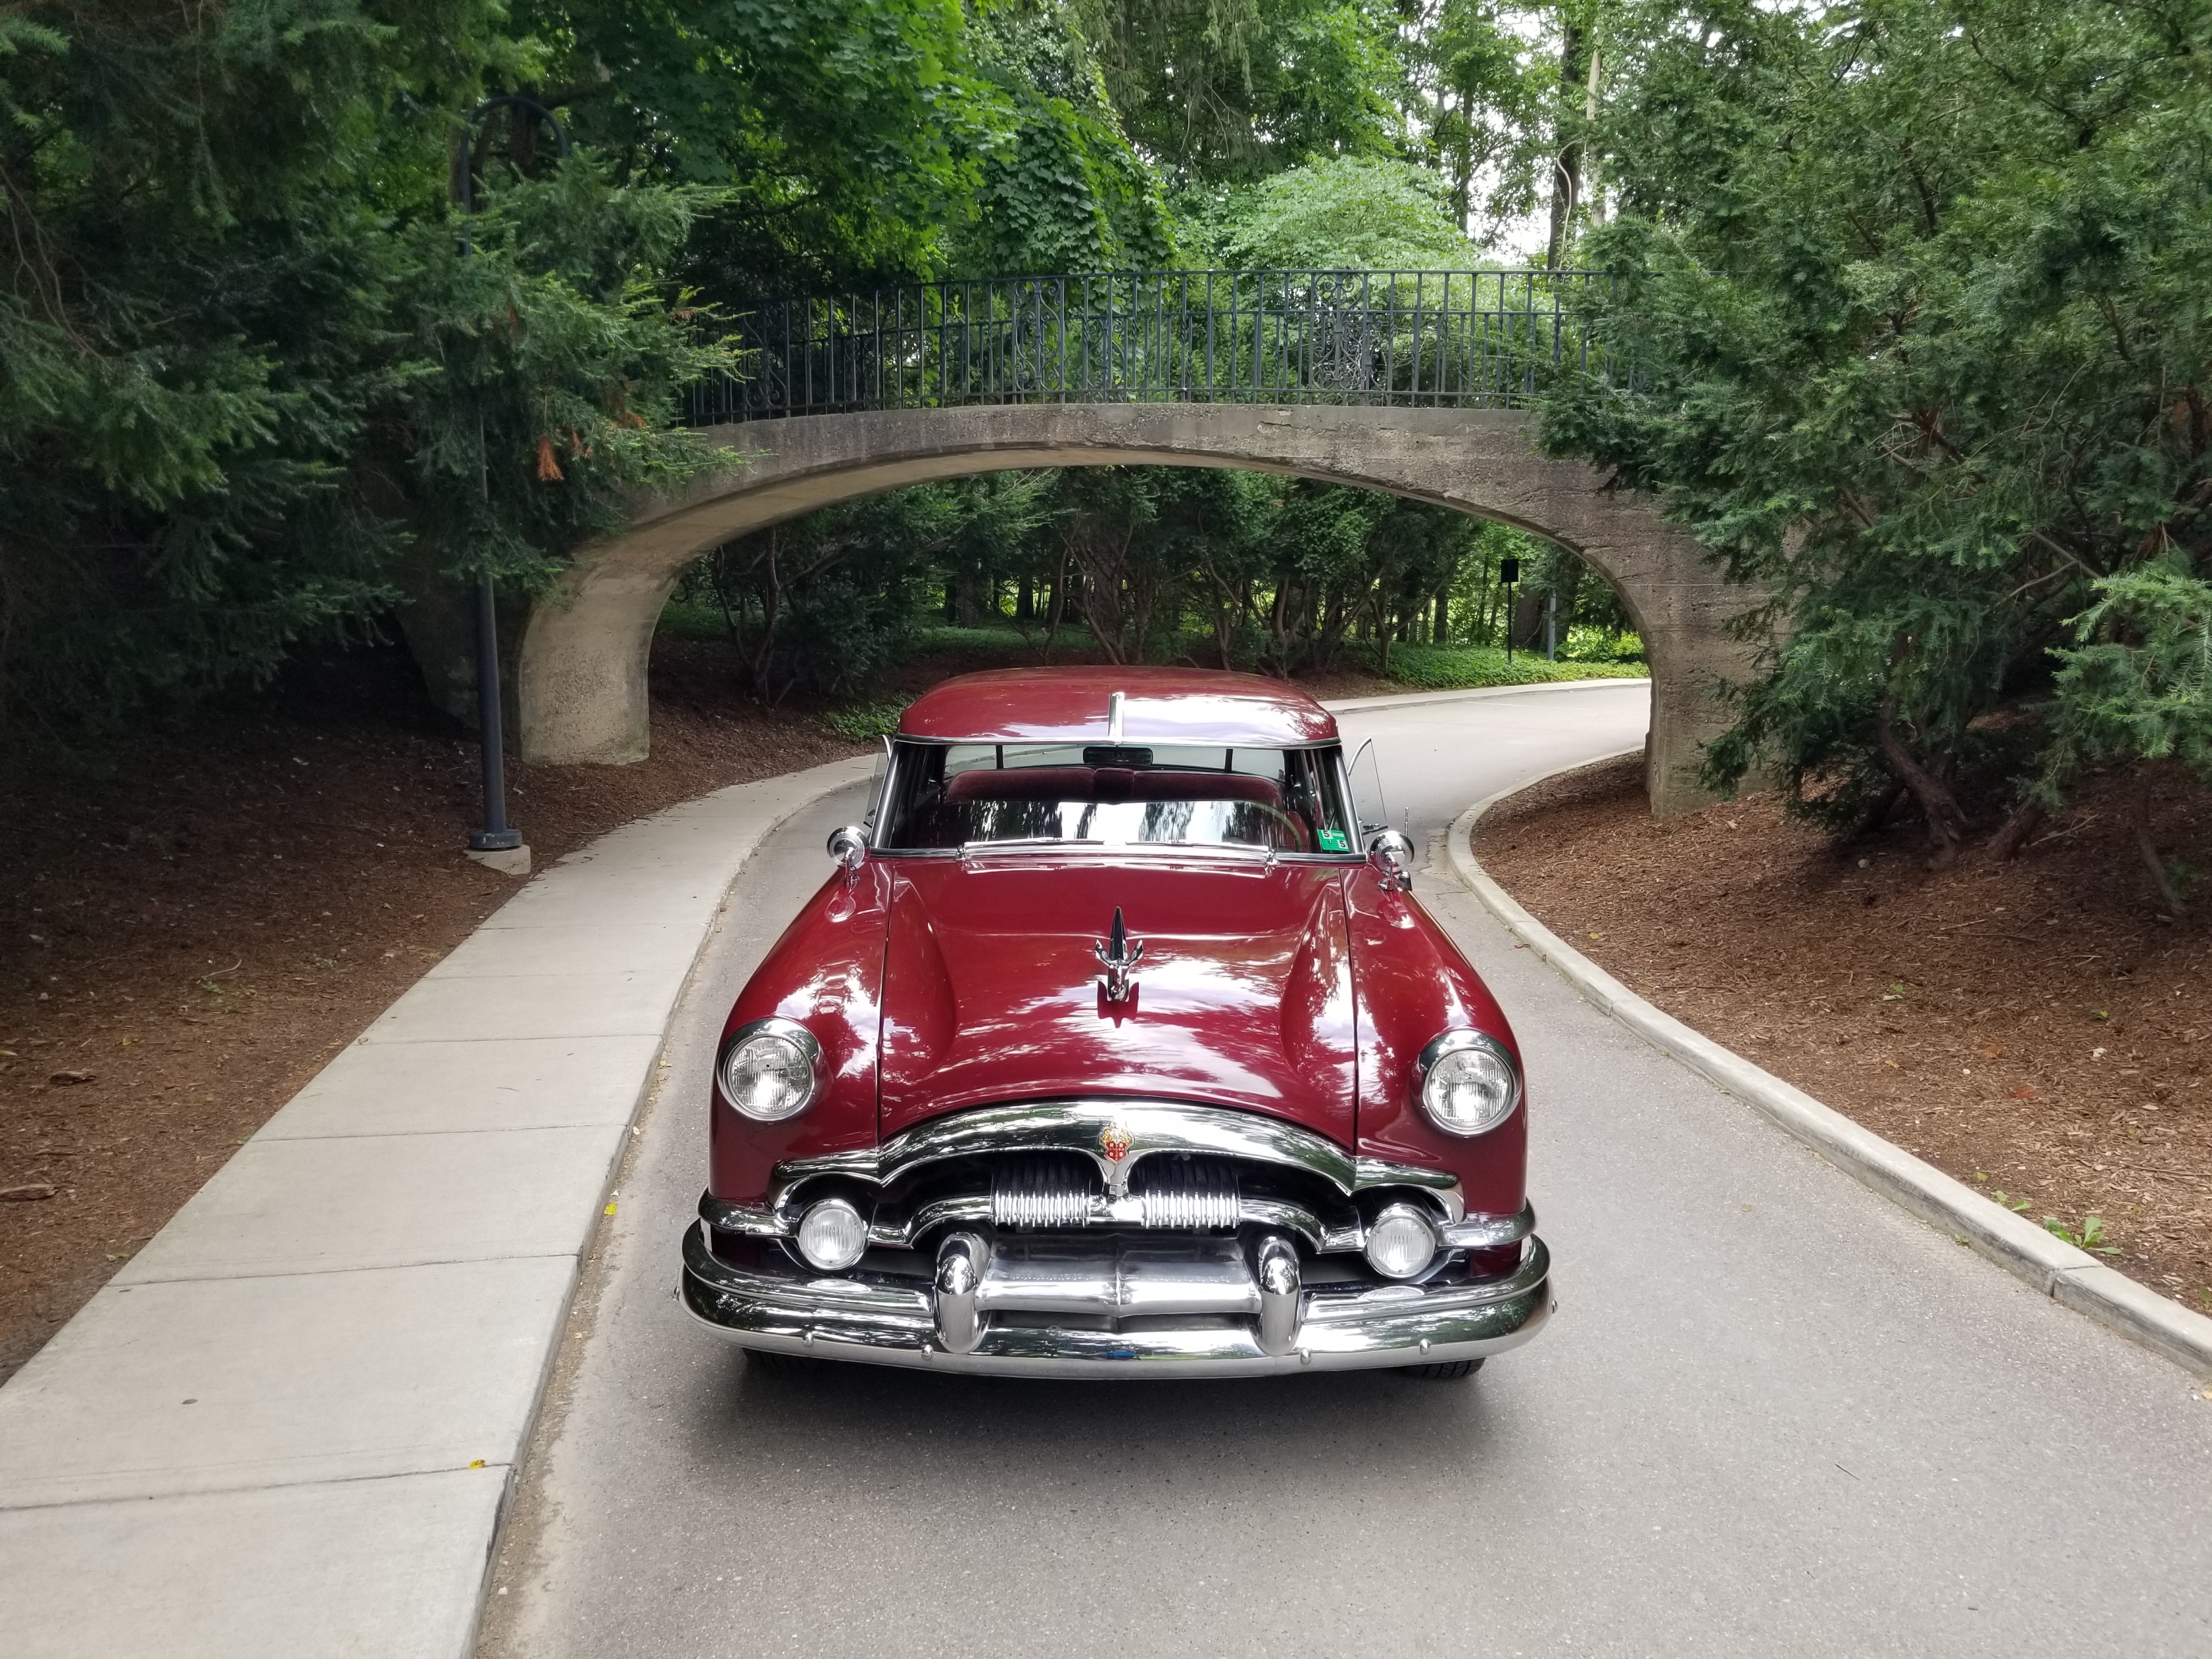 1953 Packard Patrician Touring Sedan at Cranbrook in Bloomfield Hills, MI